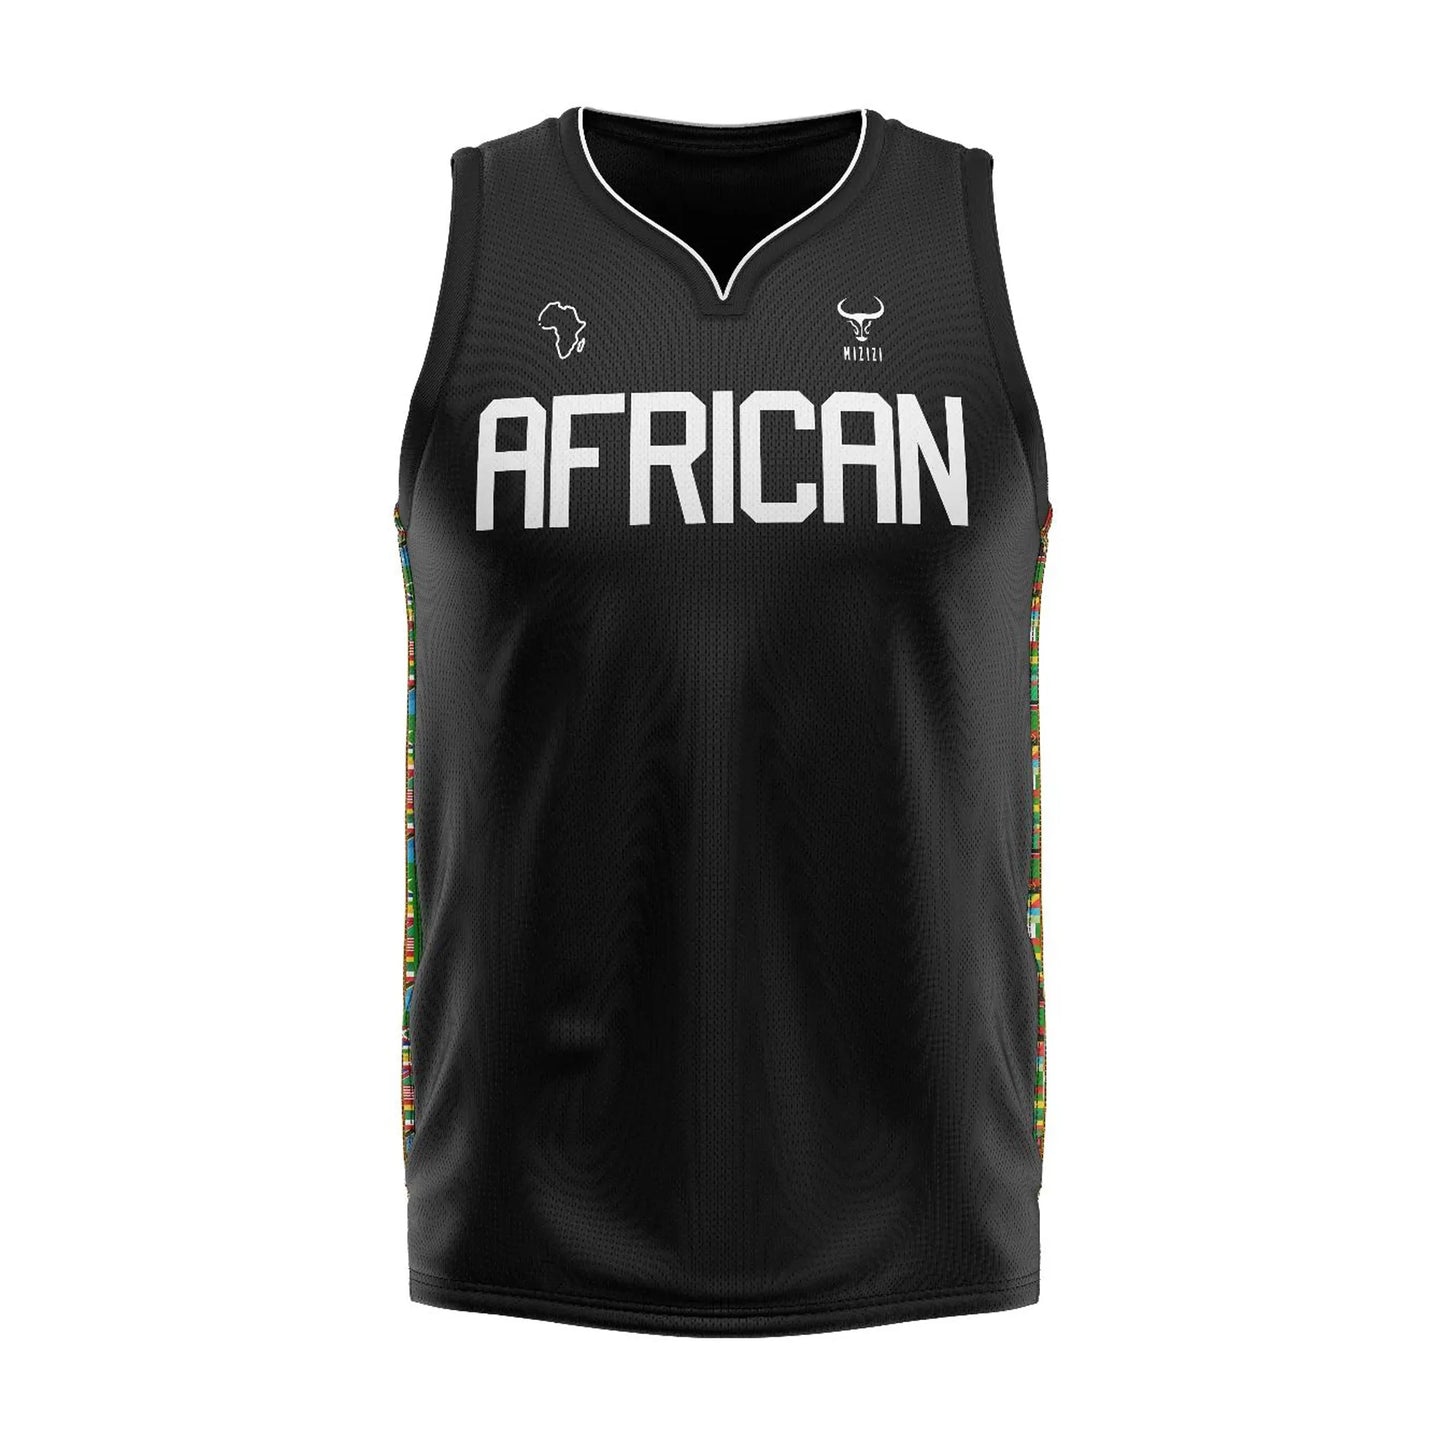 African Basketball